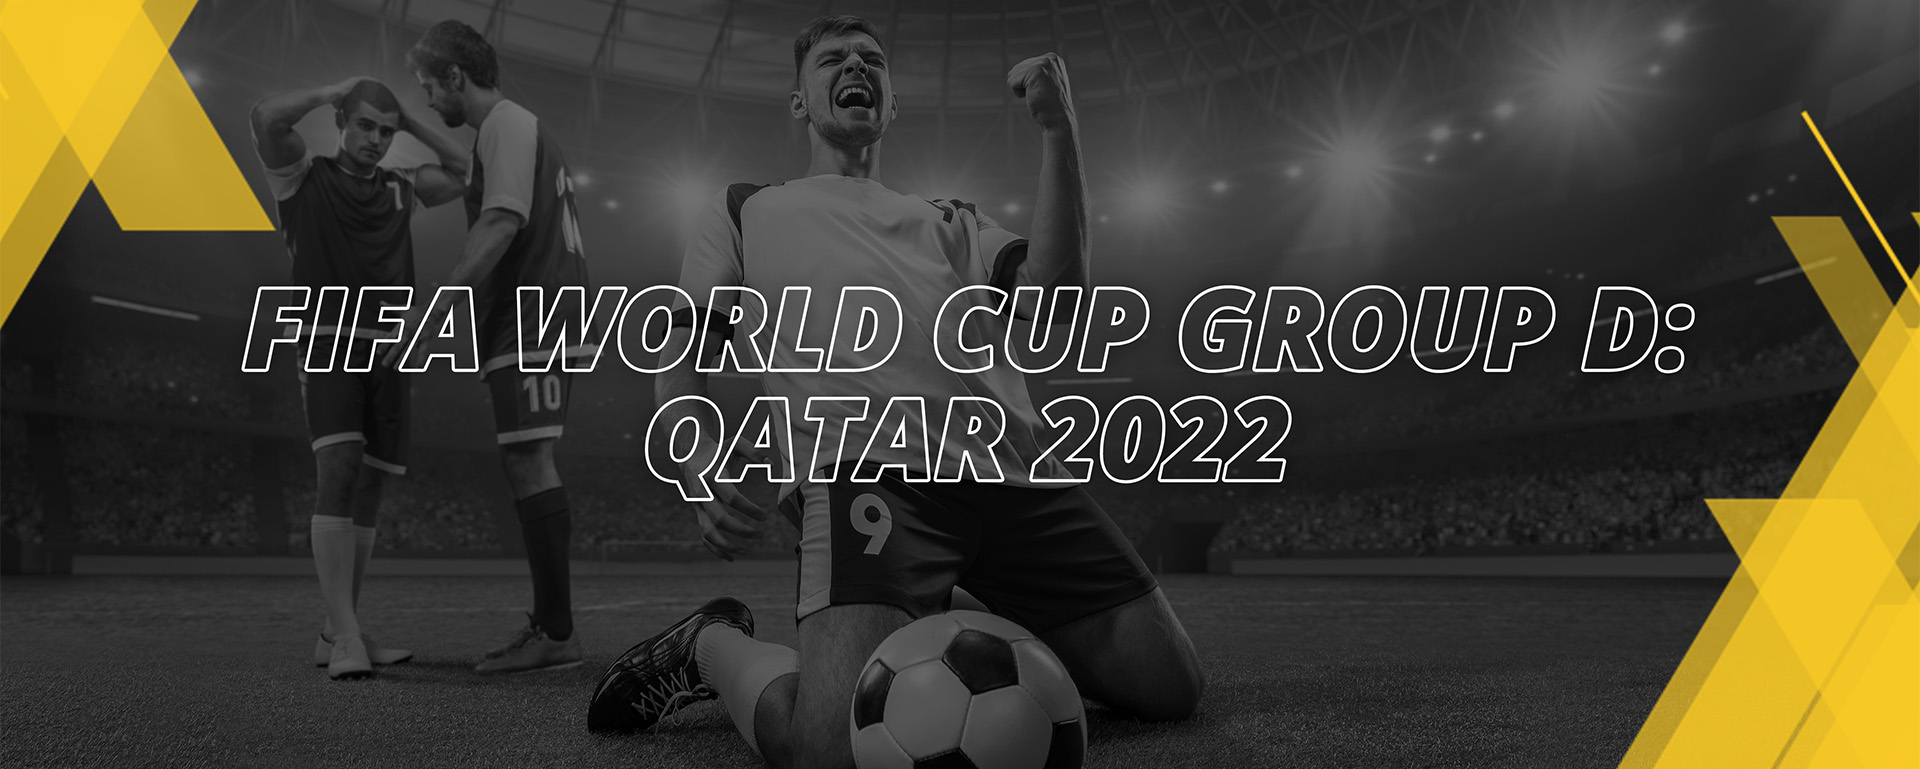 FIFA WORLD CUP GROUP D – QATAR 2022